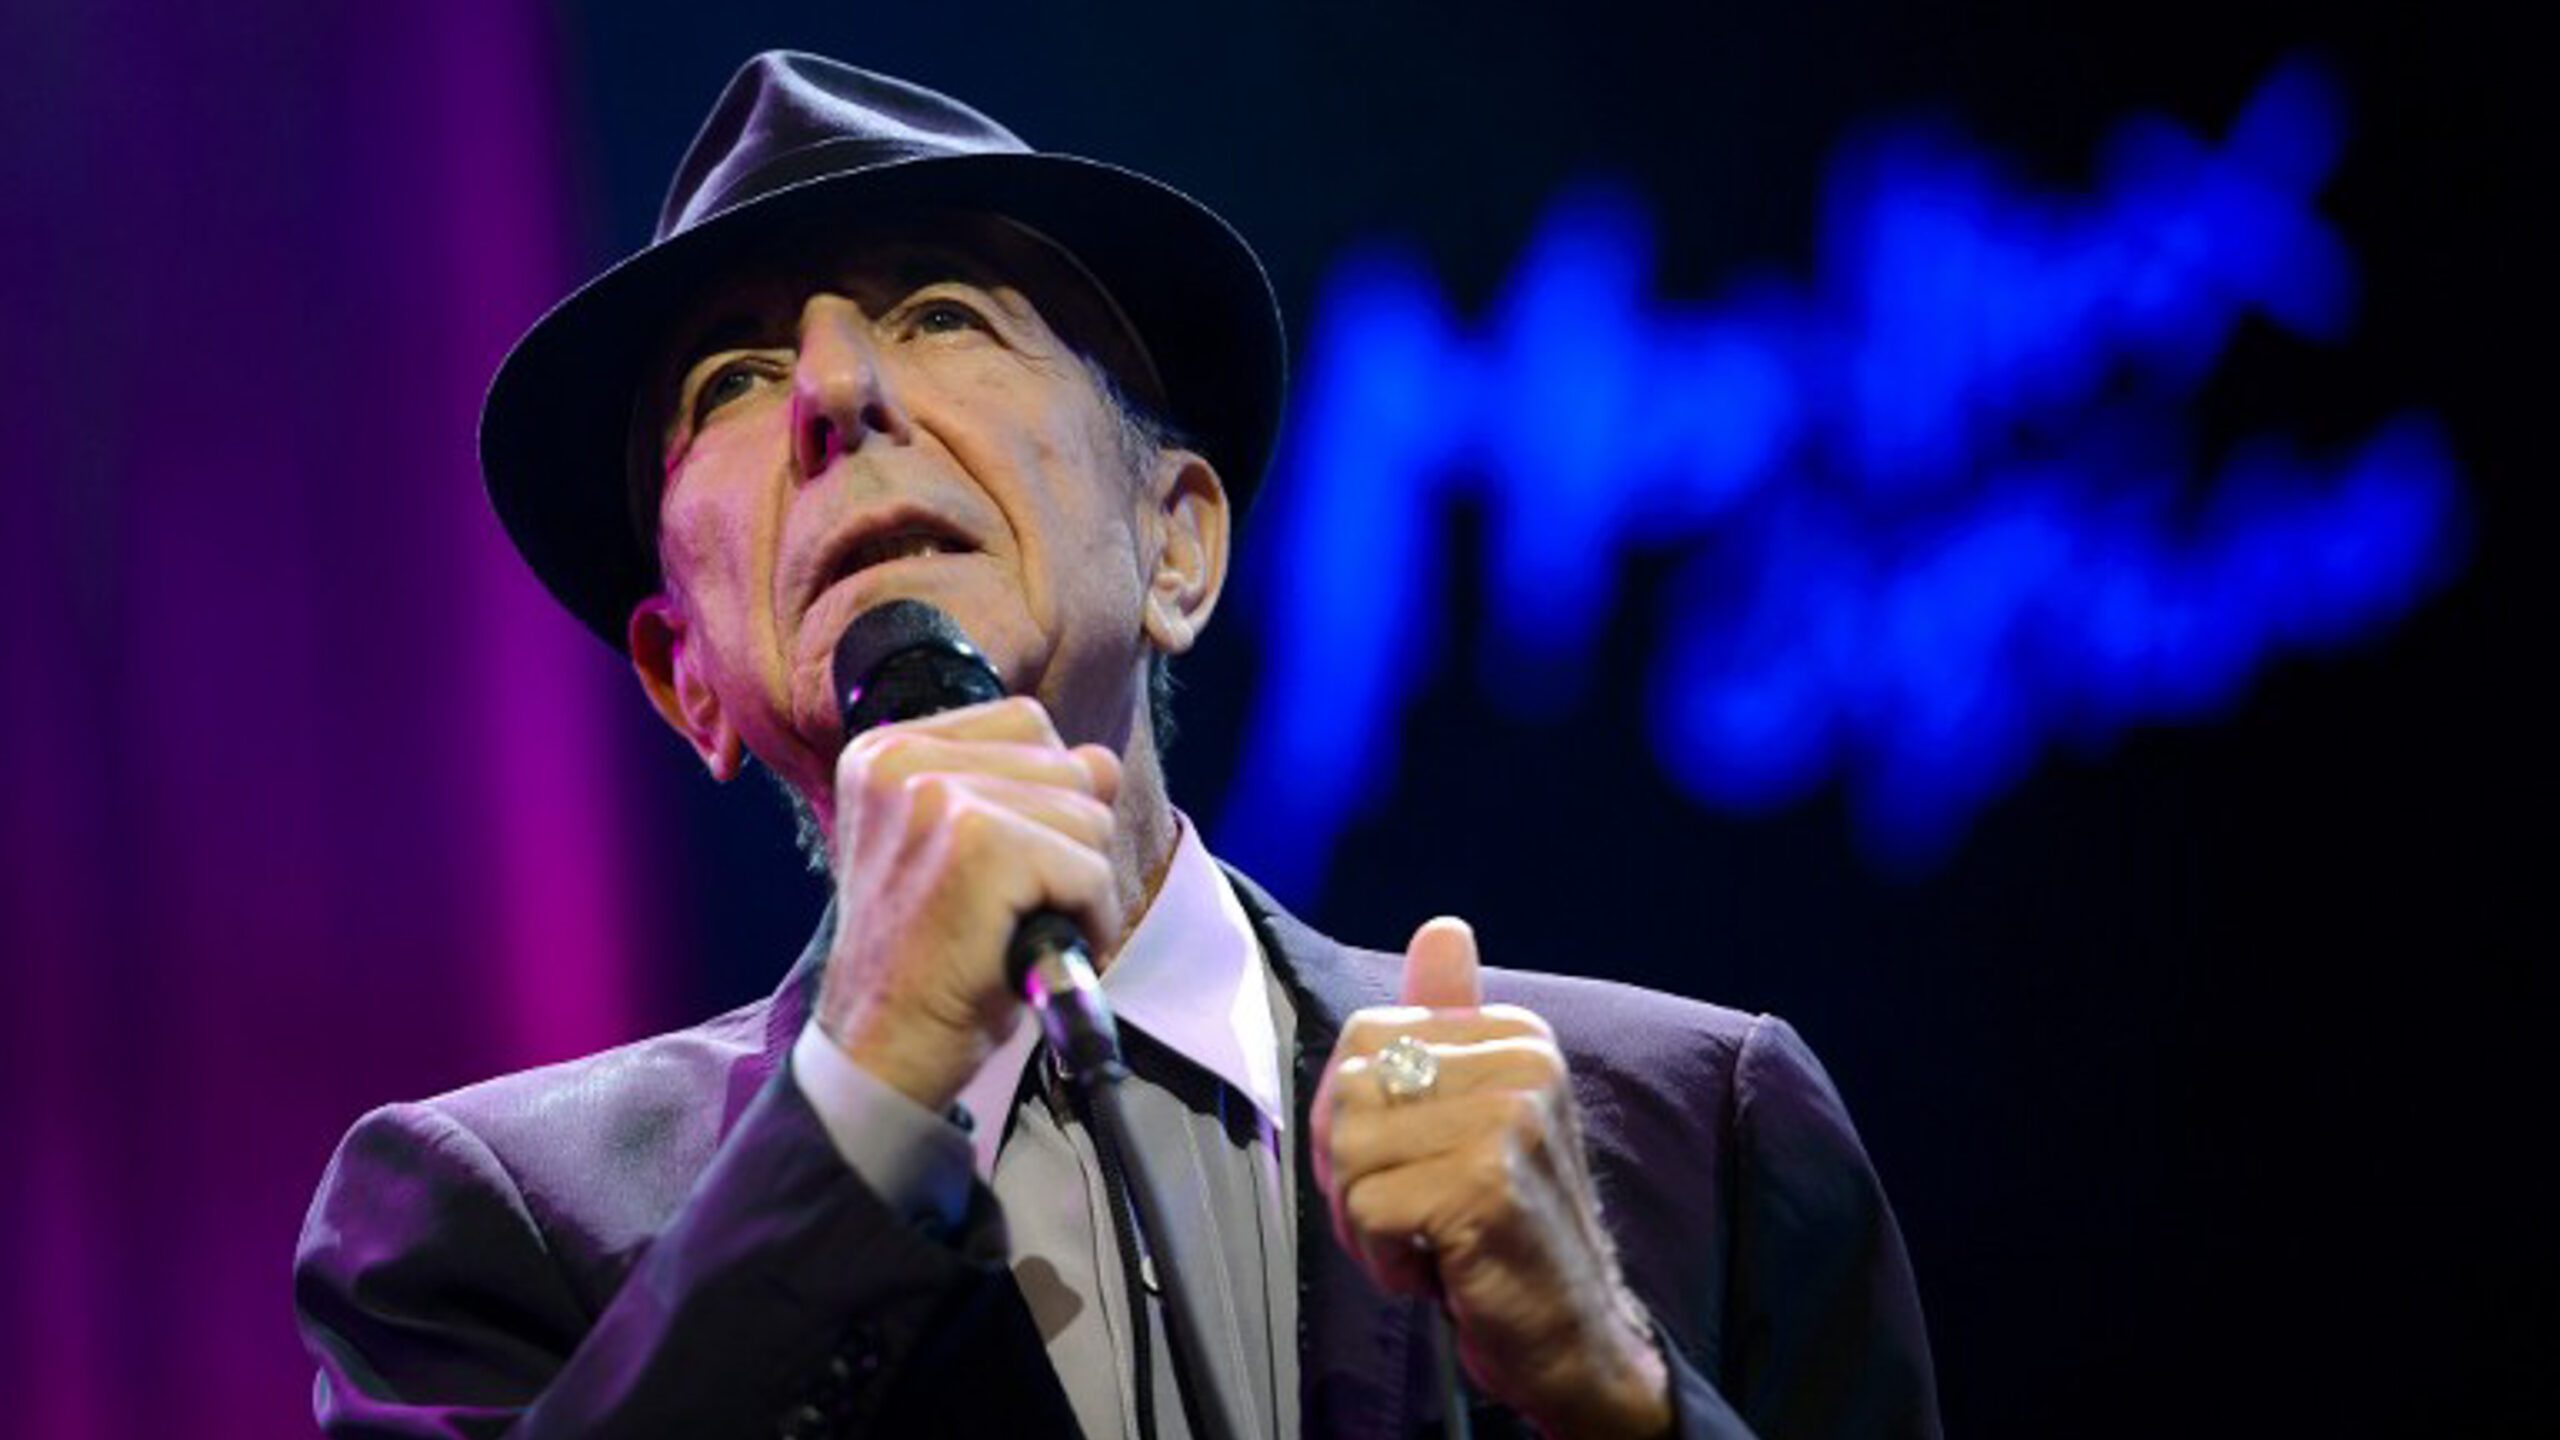 Canadian singer, songwriter, poet Leonard Cohen dies at 82 – publicist